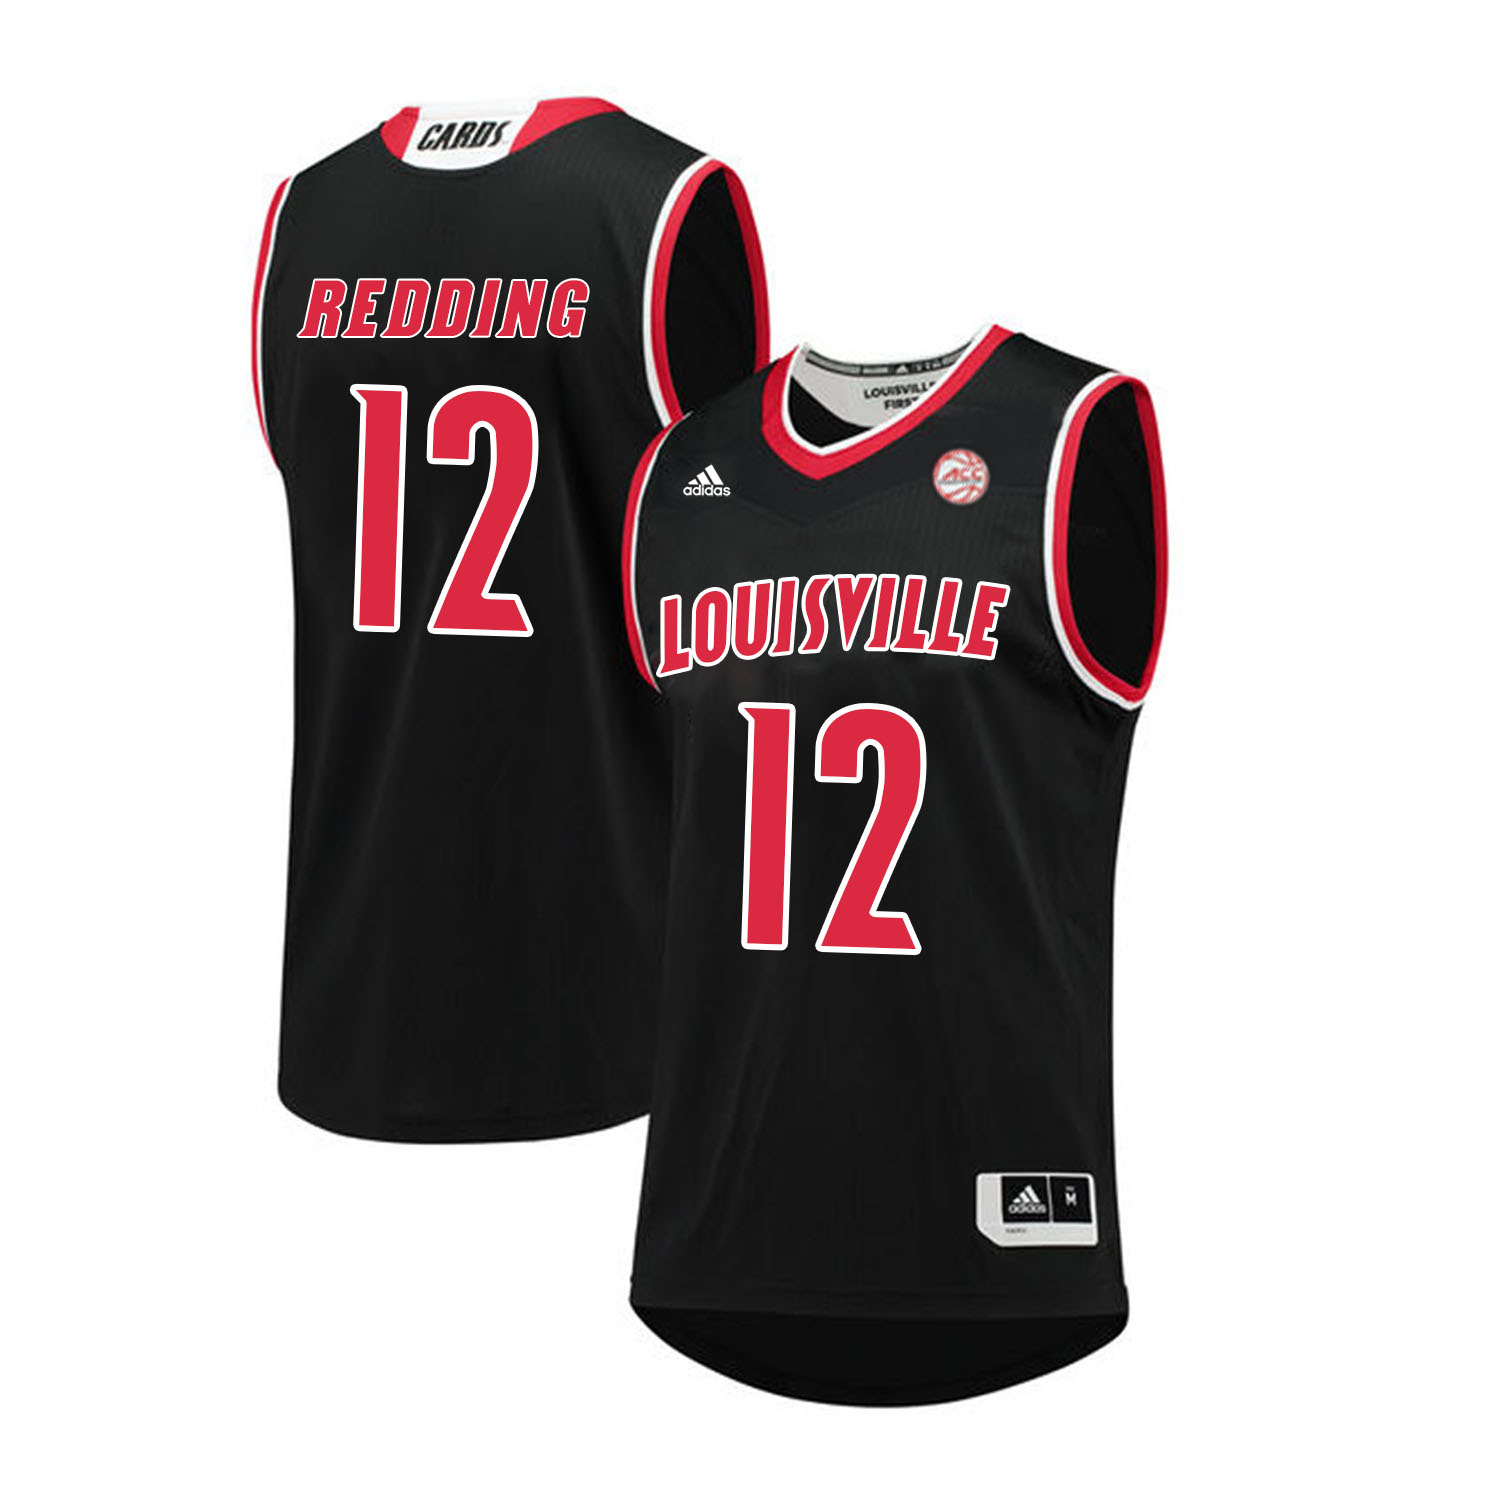 Louisville Cardinals 12 Jacob Redding Black College Basketball Jersey